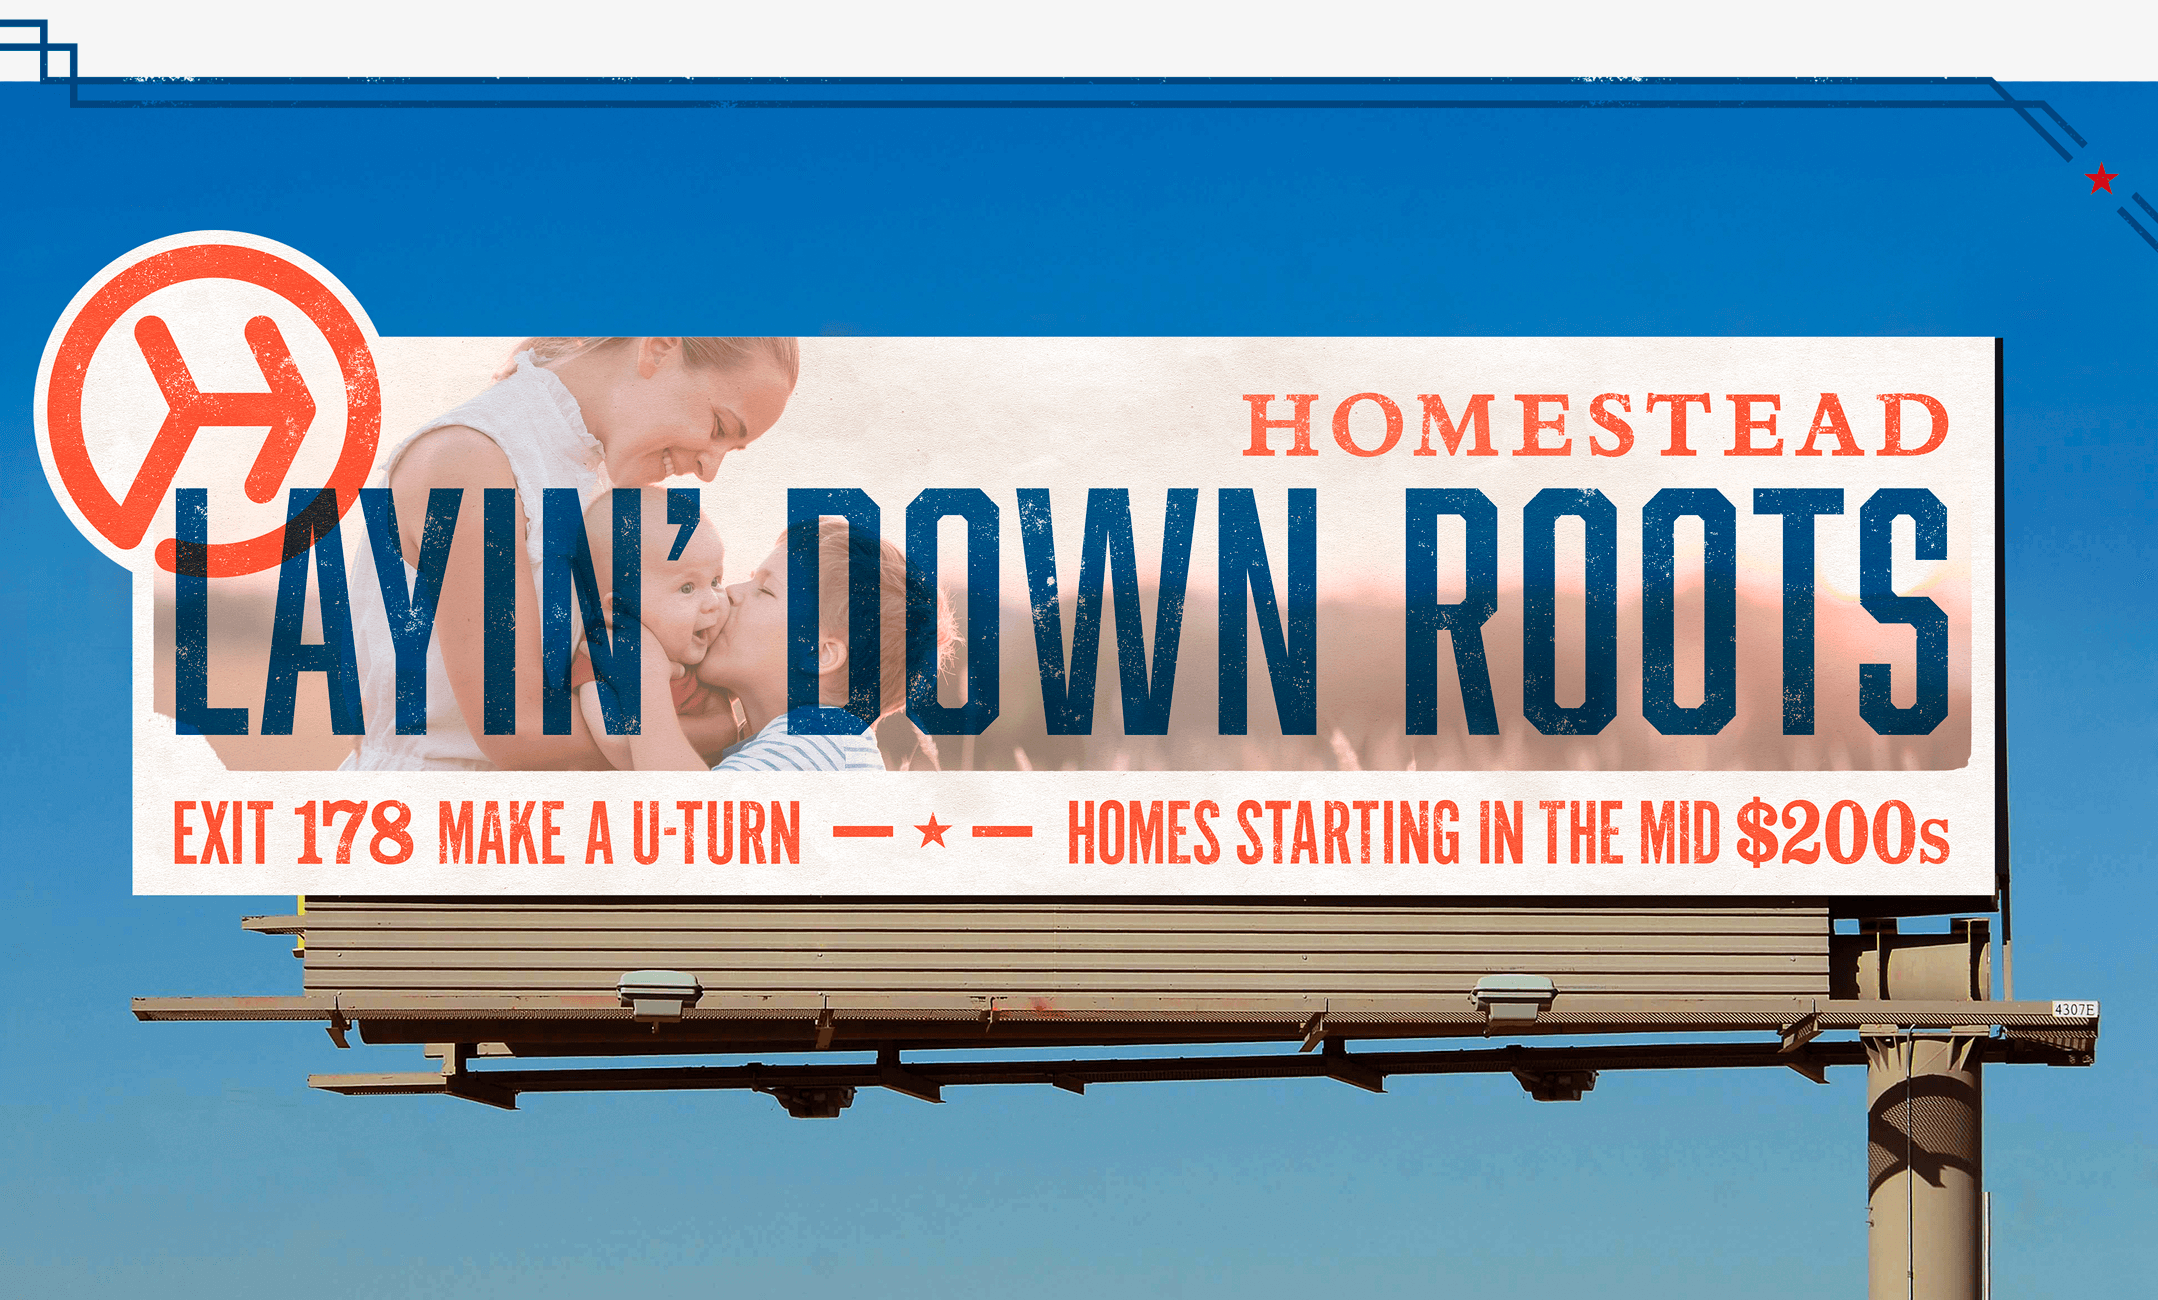 Homestead living community billboard mockup in Texas